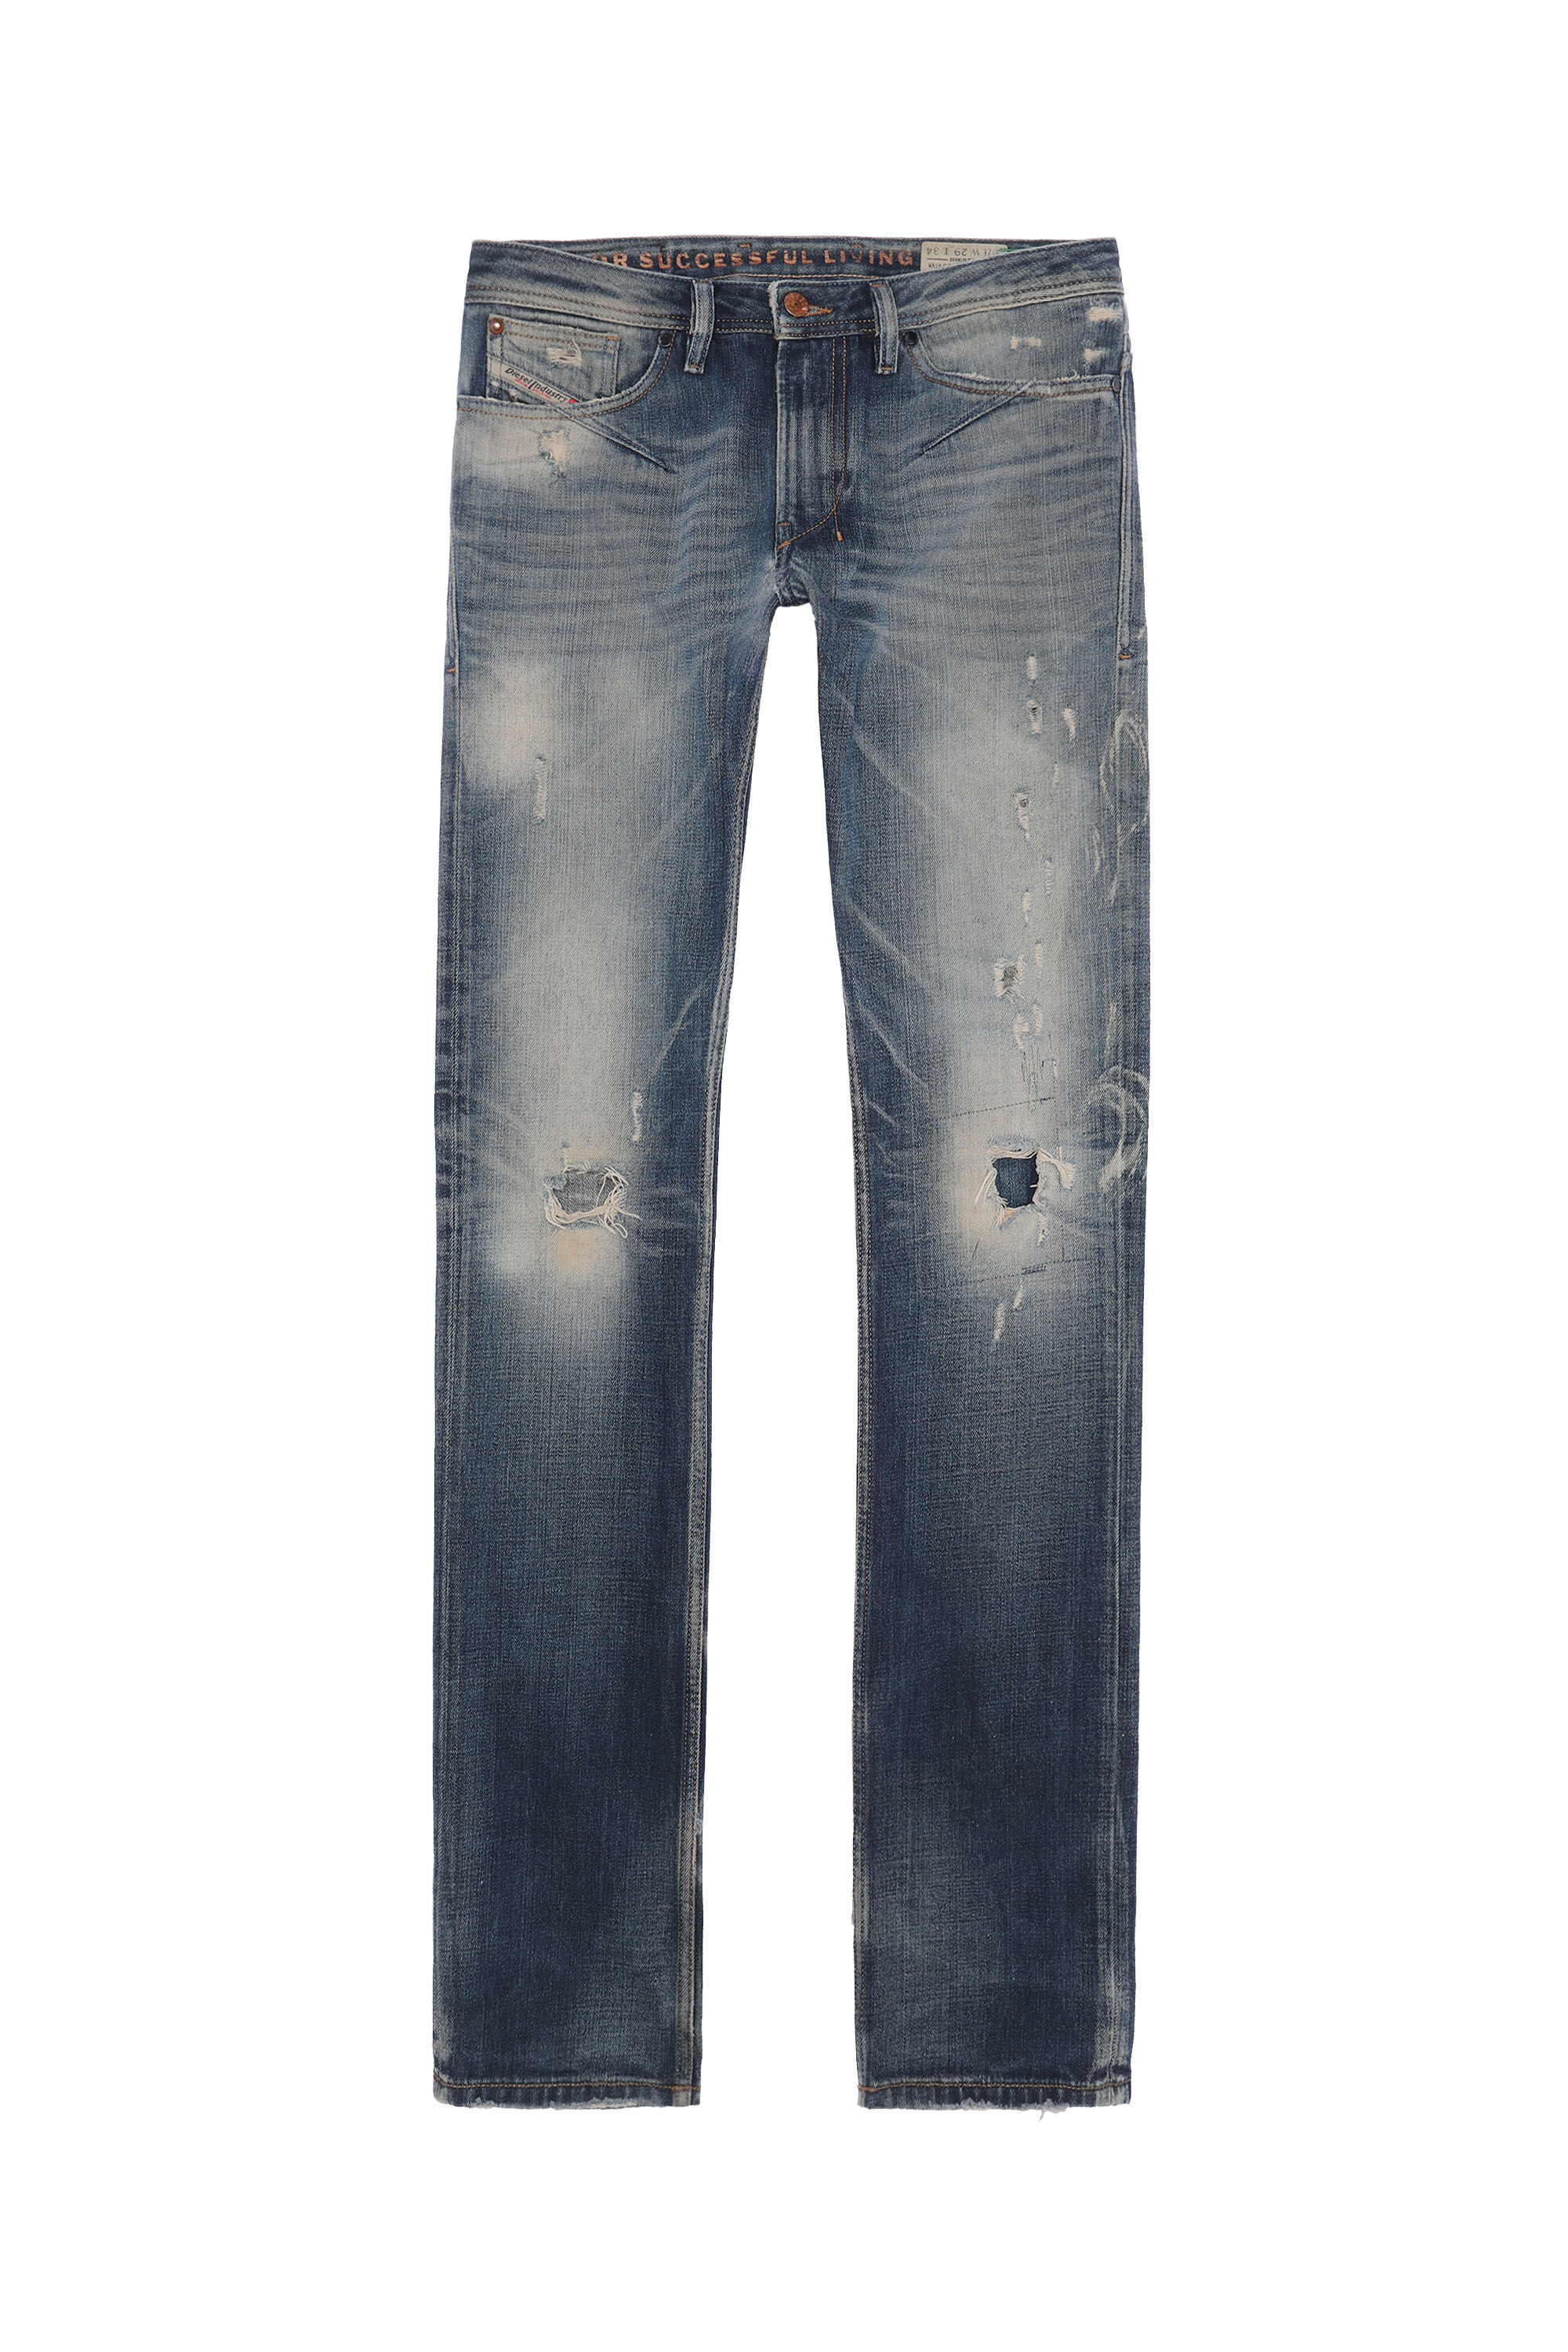 SHIONER Man Jeans | Diesel Second Hand